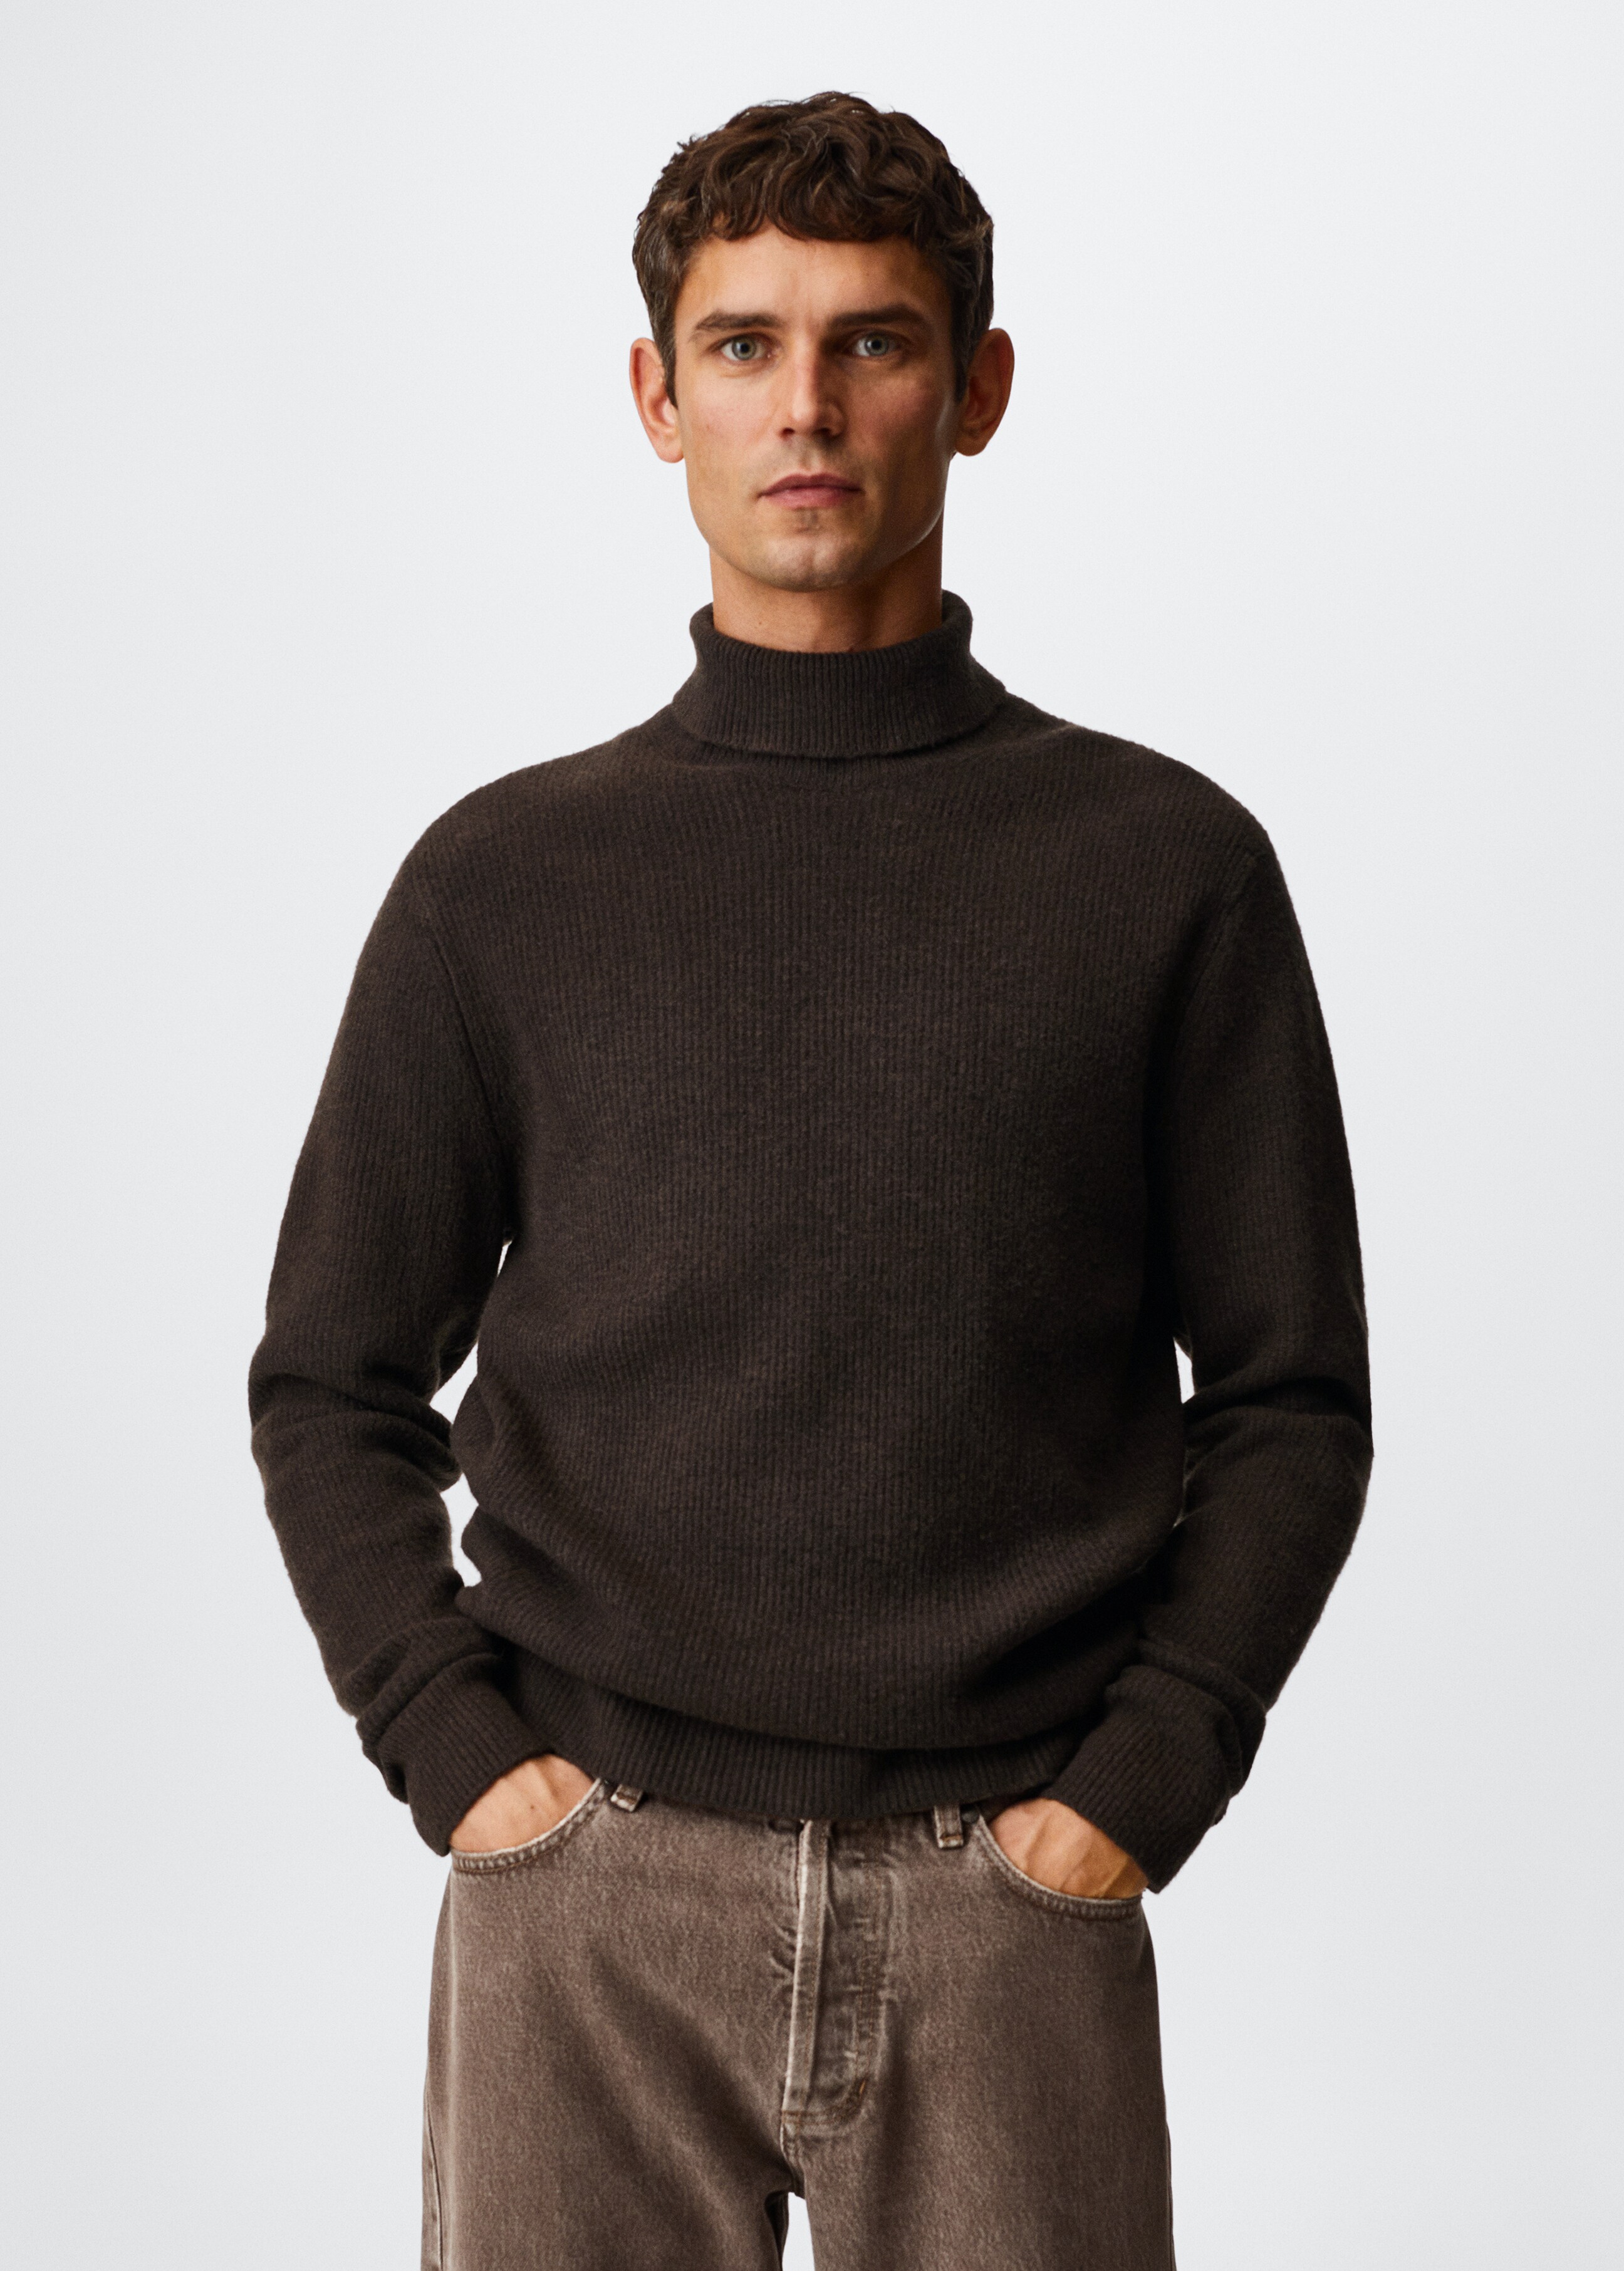 Structured turtleneck sweater